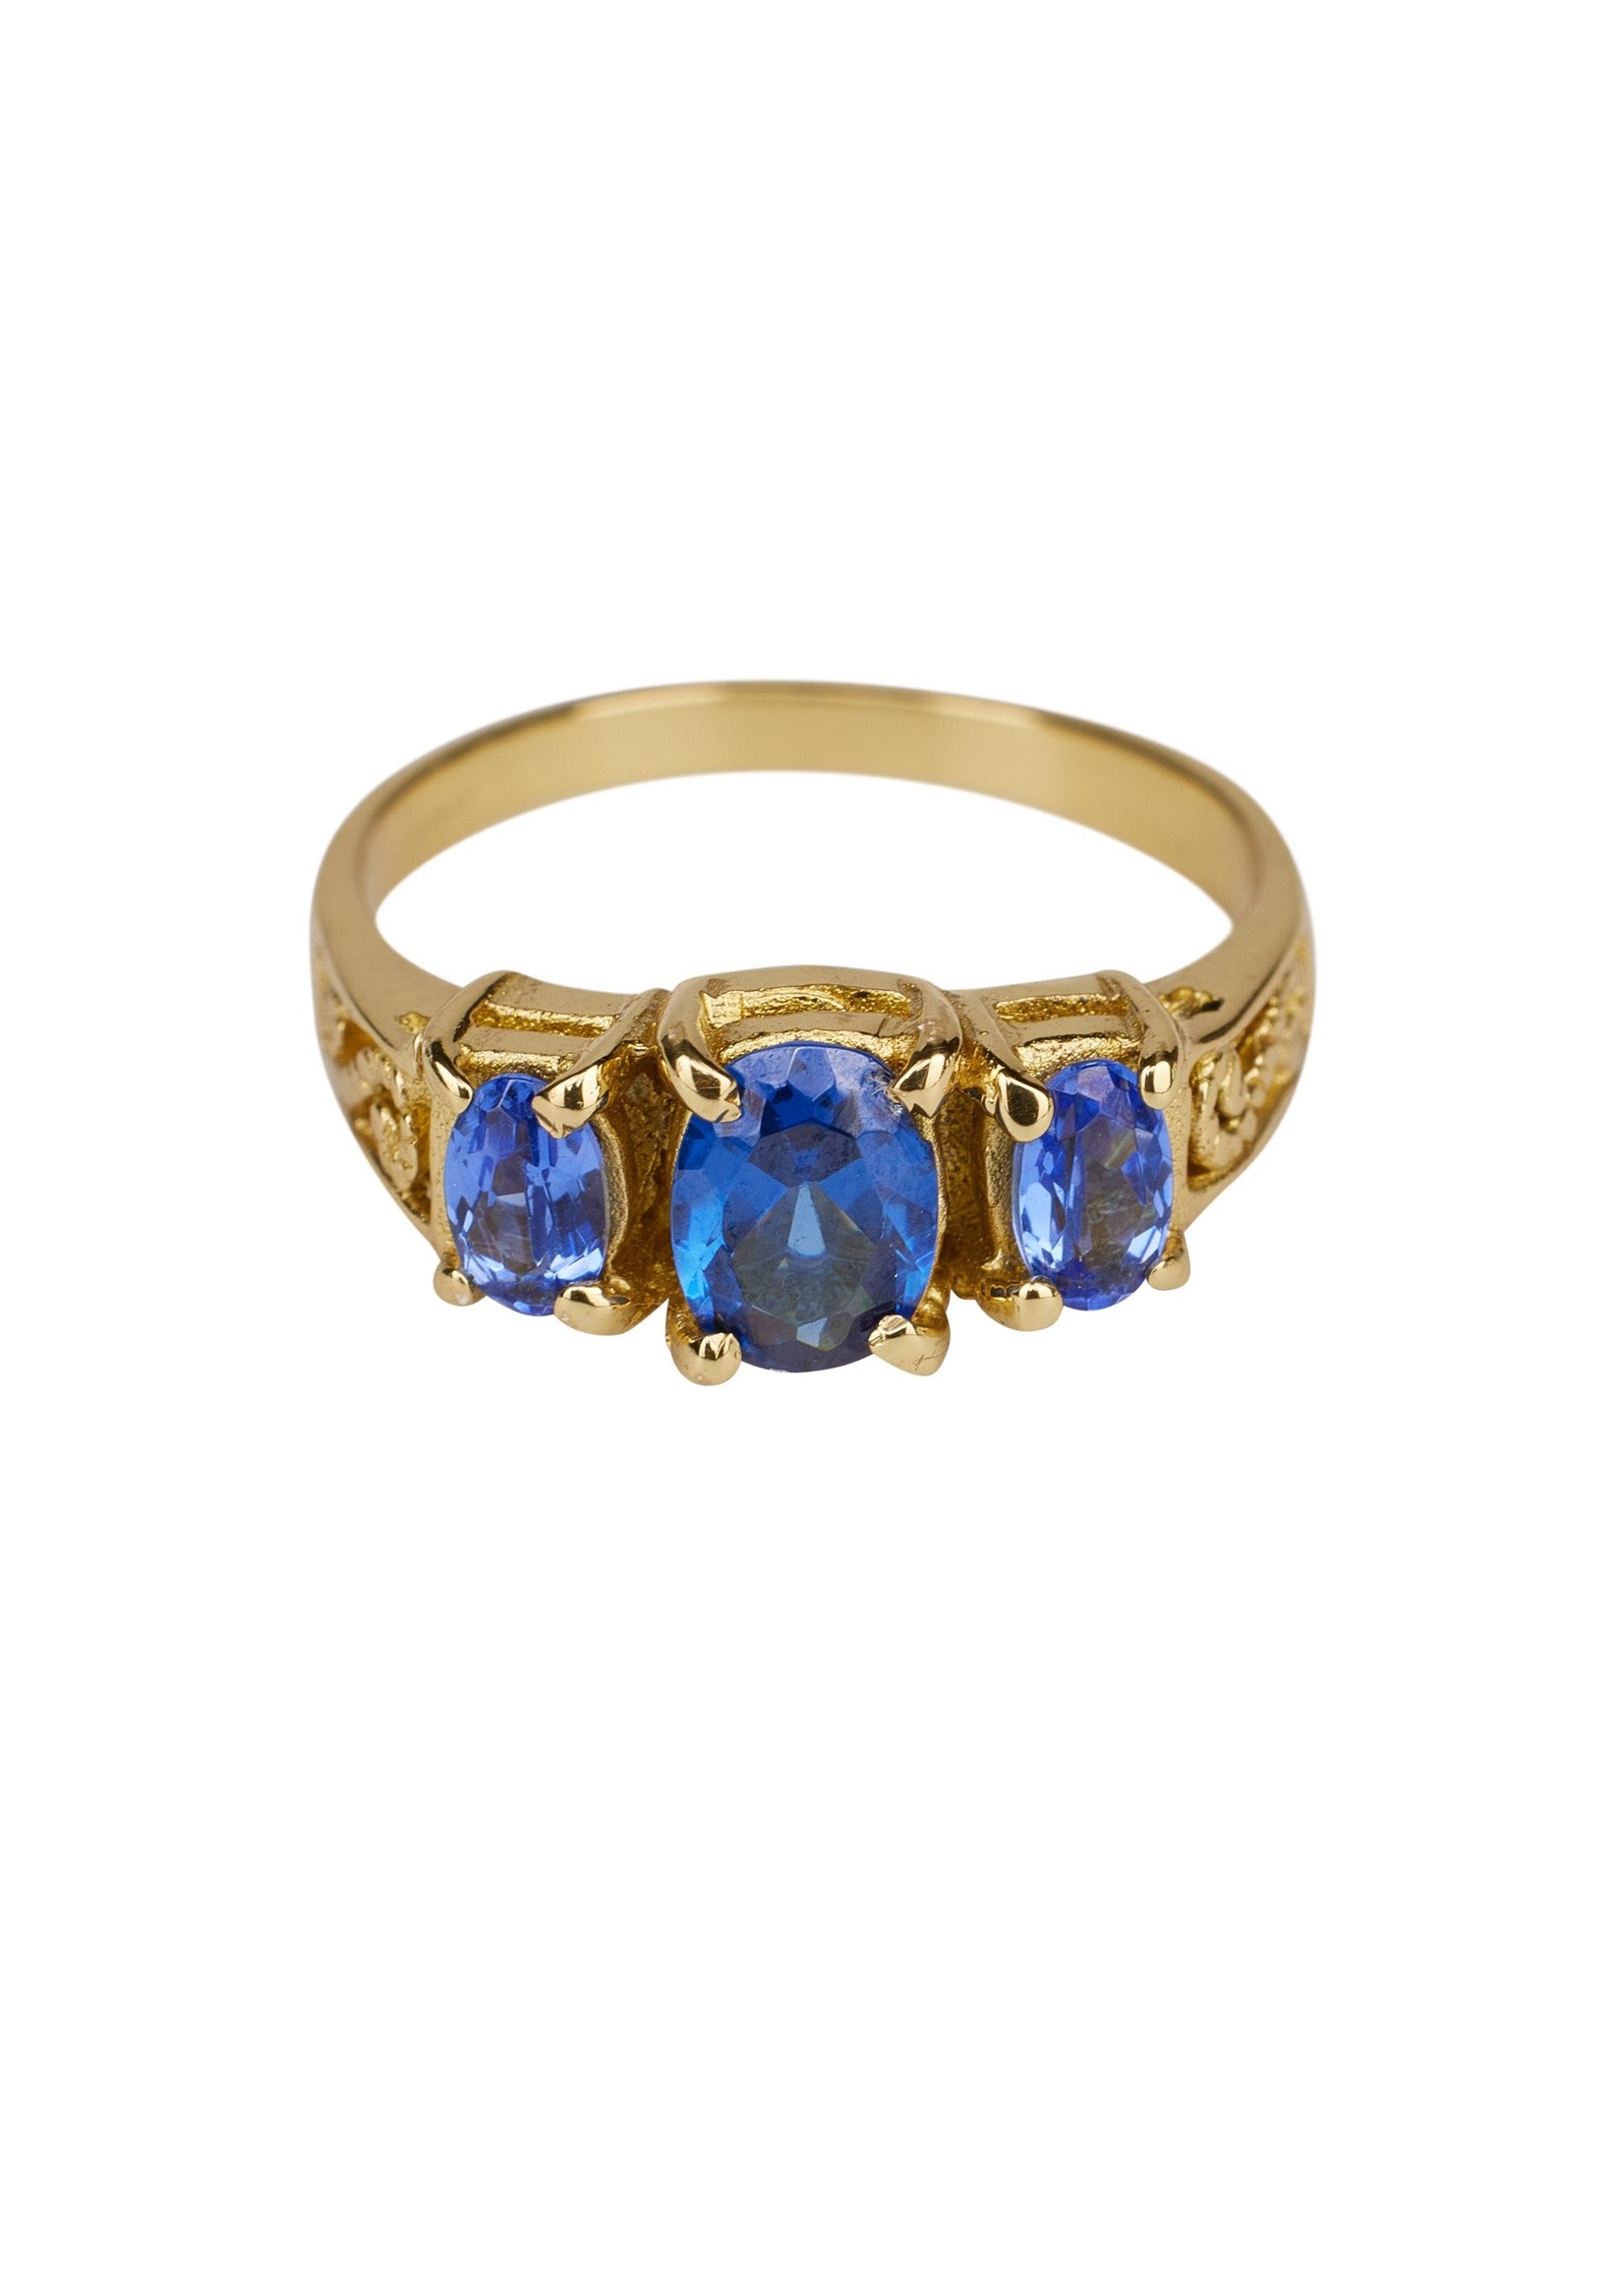 Ring, Vintage Blue Stone, brass